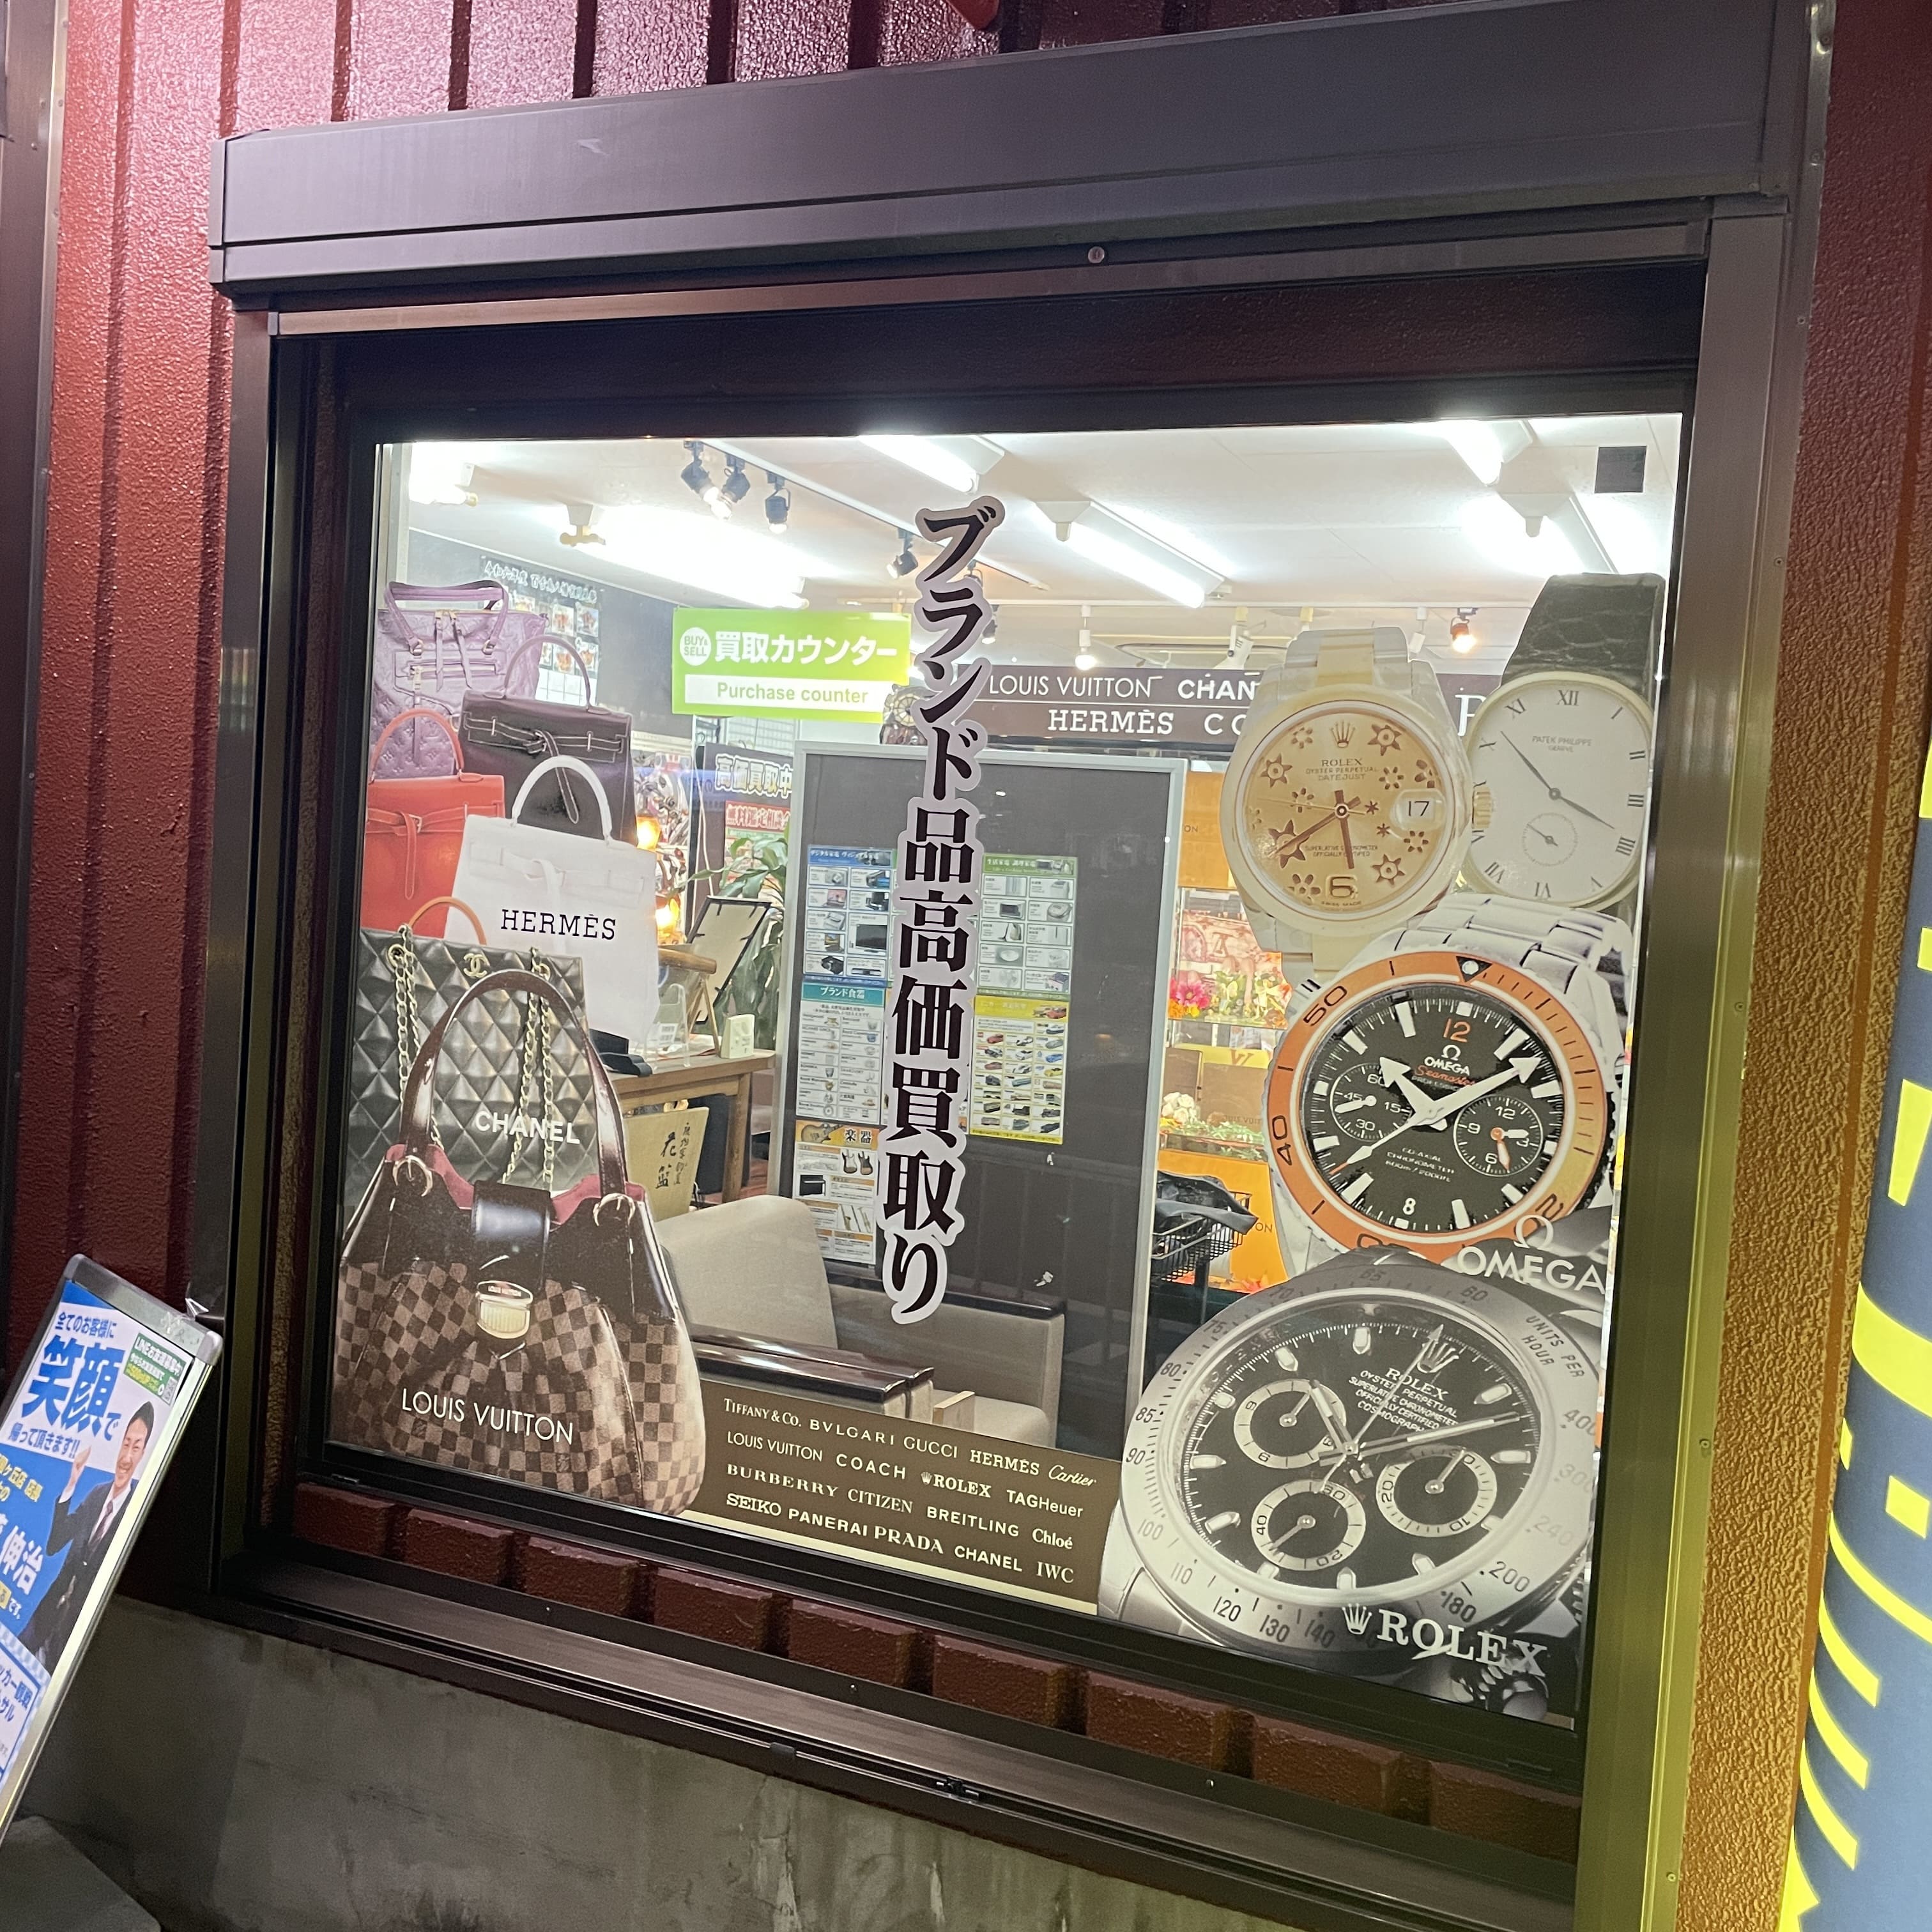 Images リサイクルマート堺三国ヶ丘店